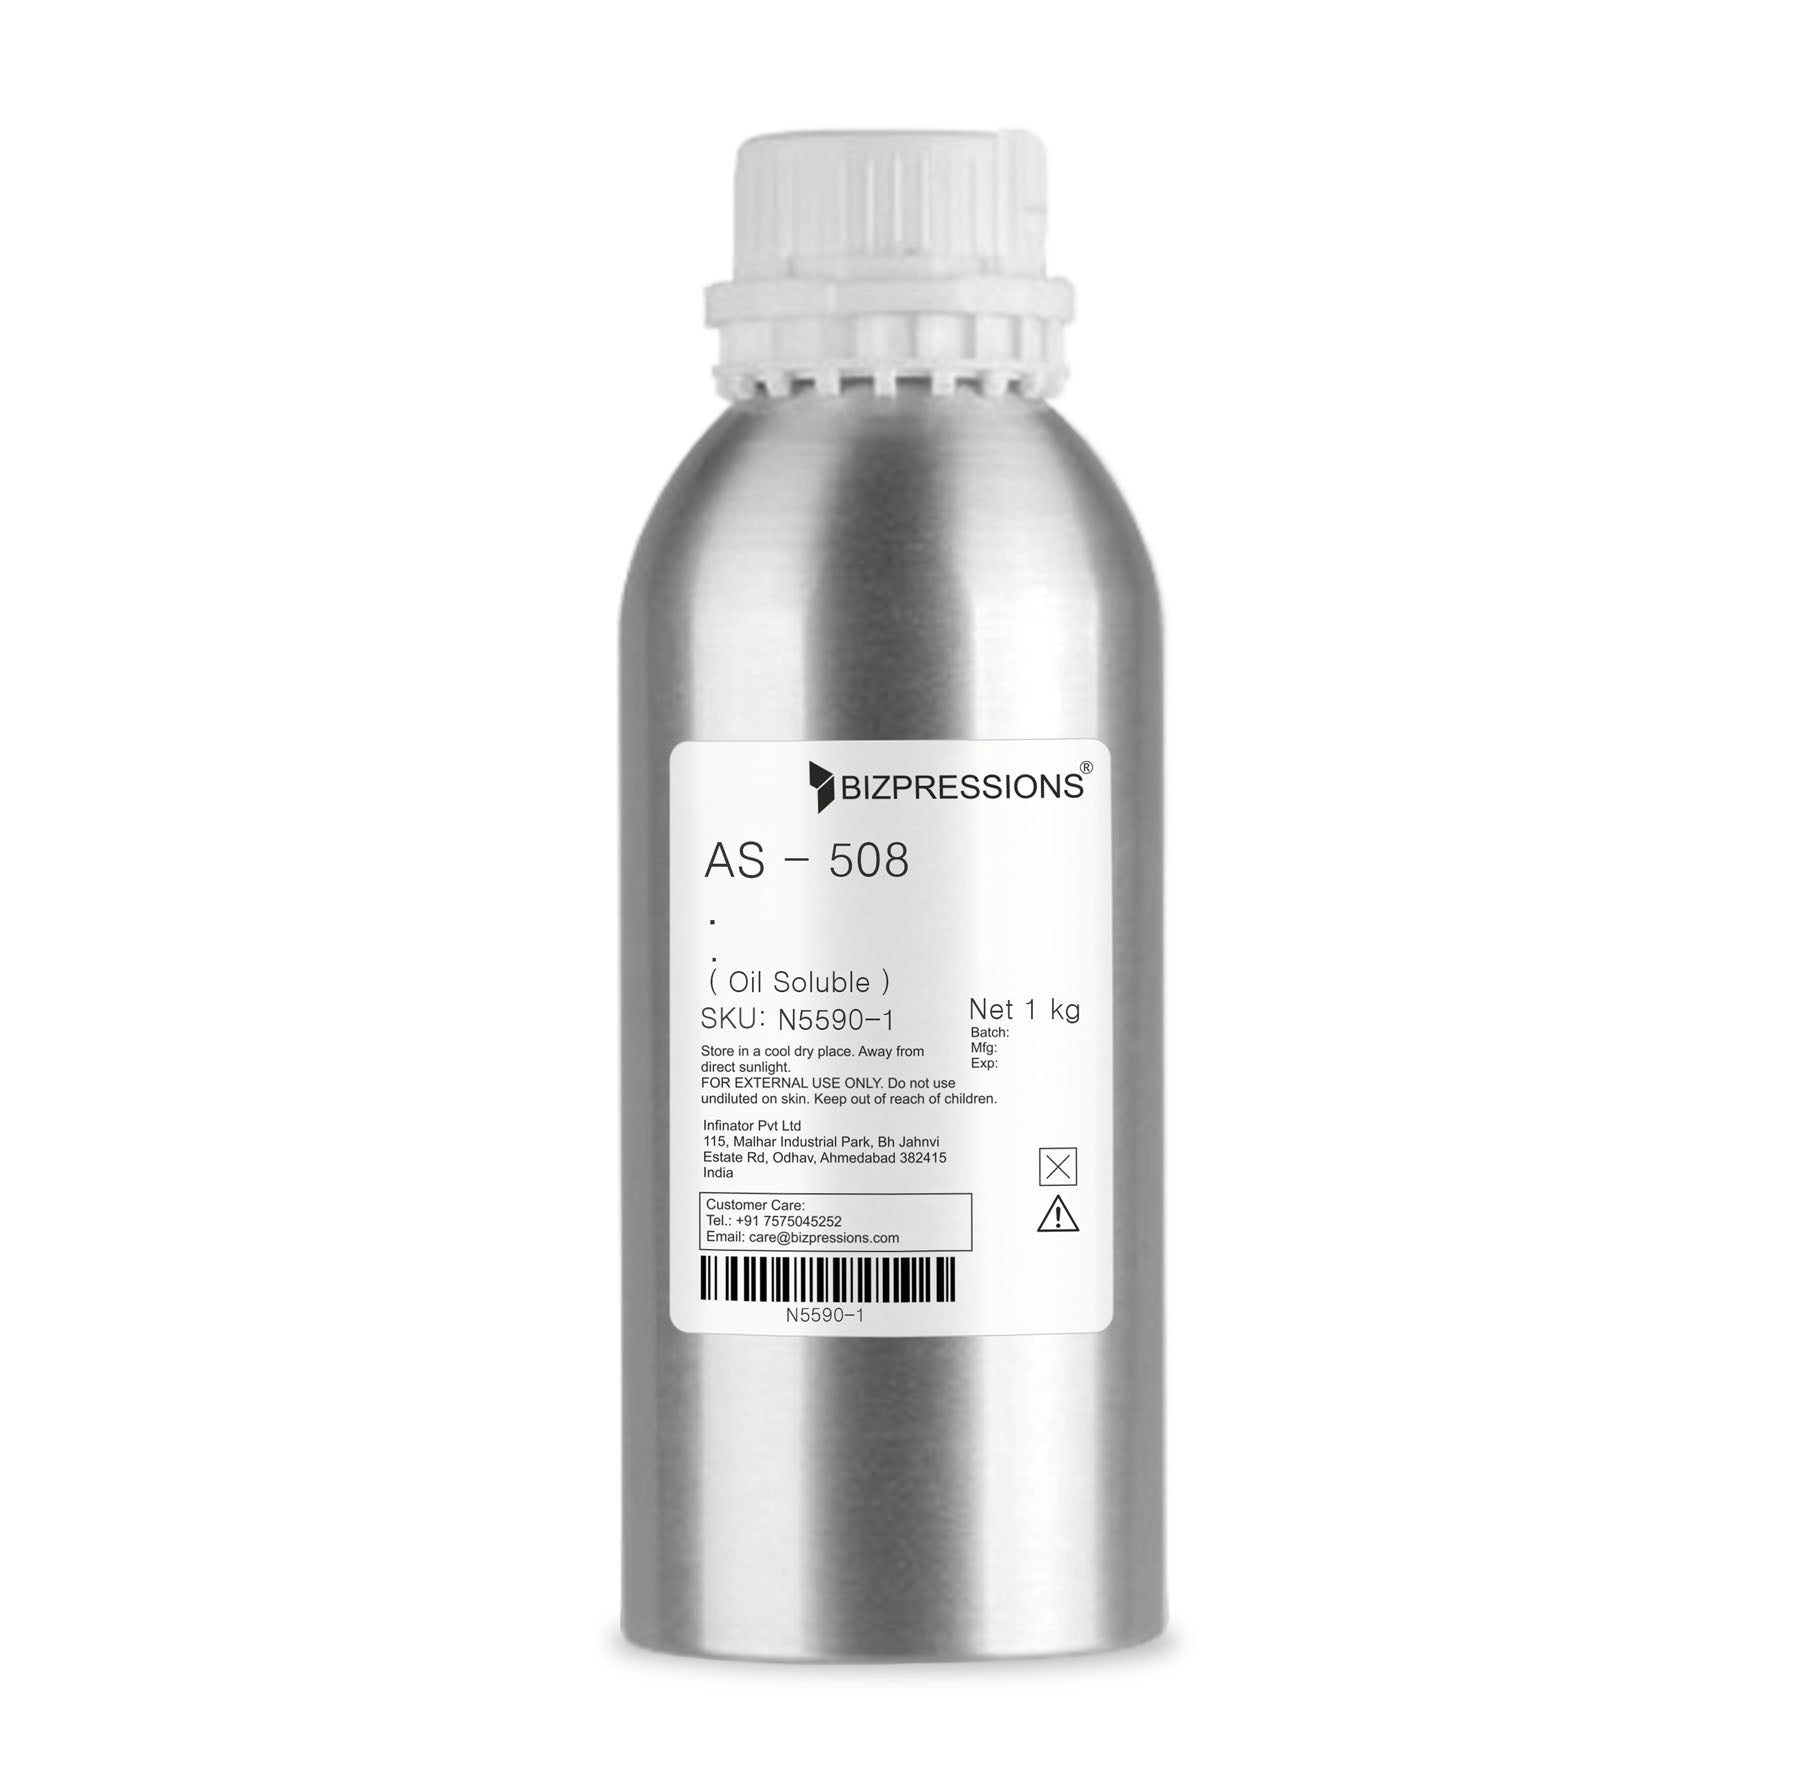 AS - 508 - Fragrance ( Oil Soluble ) - 1 kg